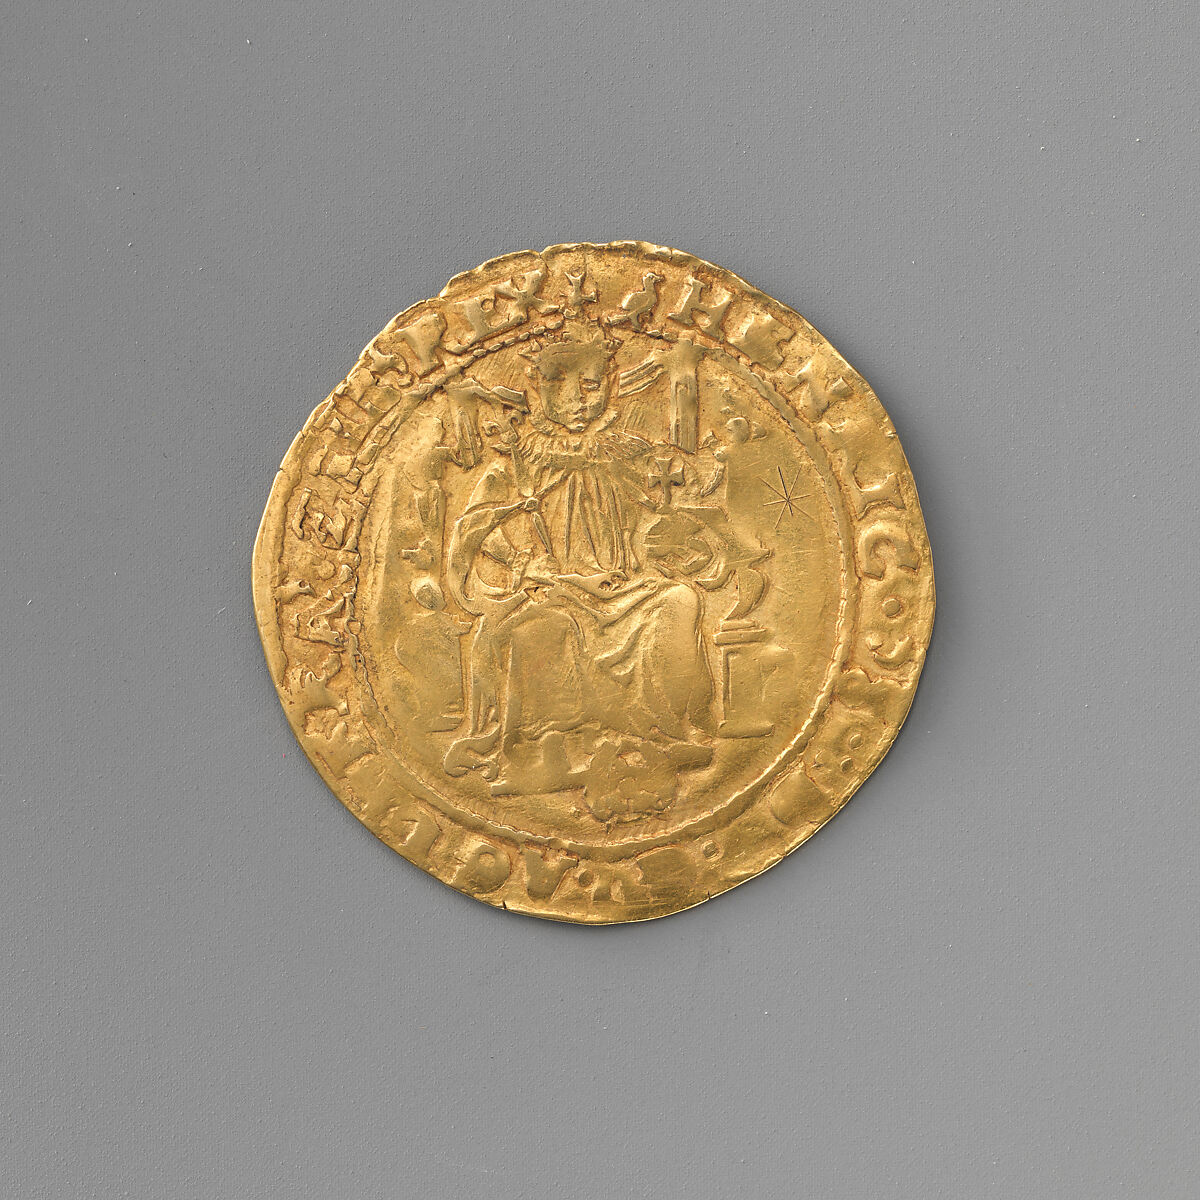 Half sovereign of Henry VIII, Gold, British 